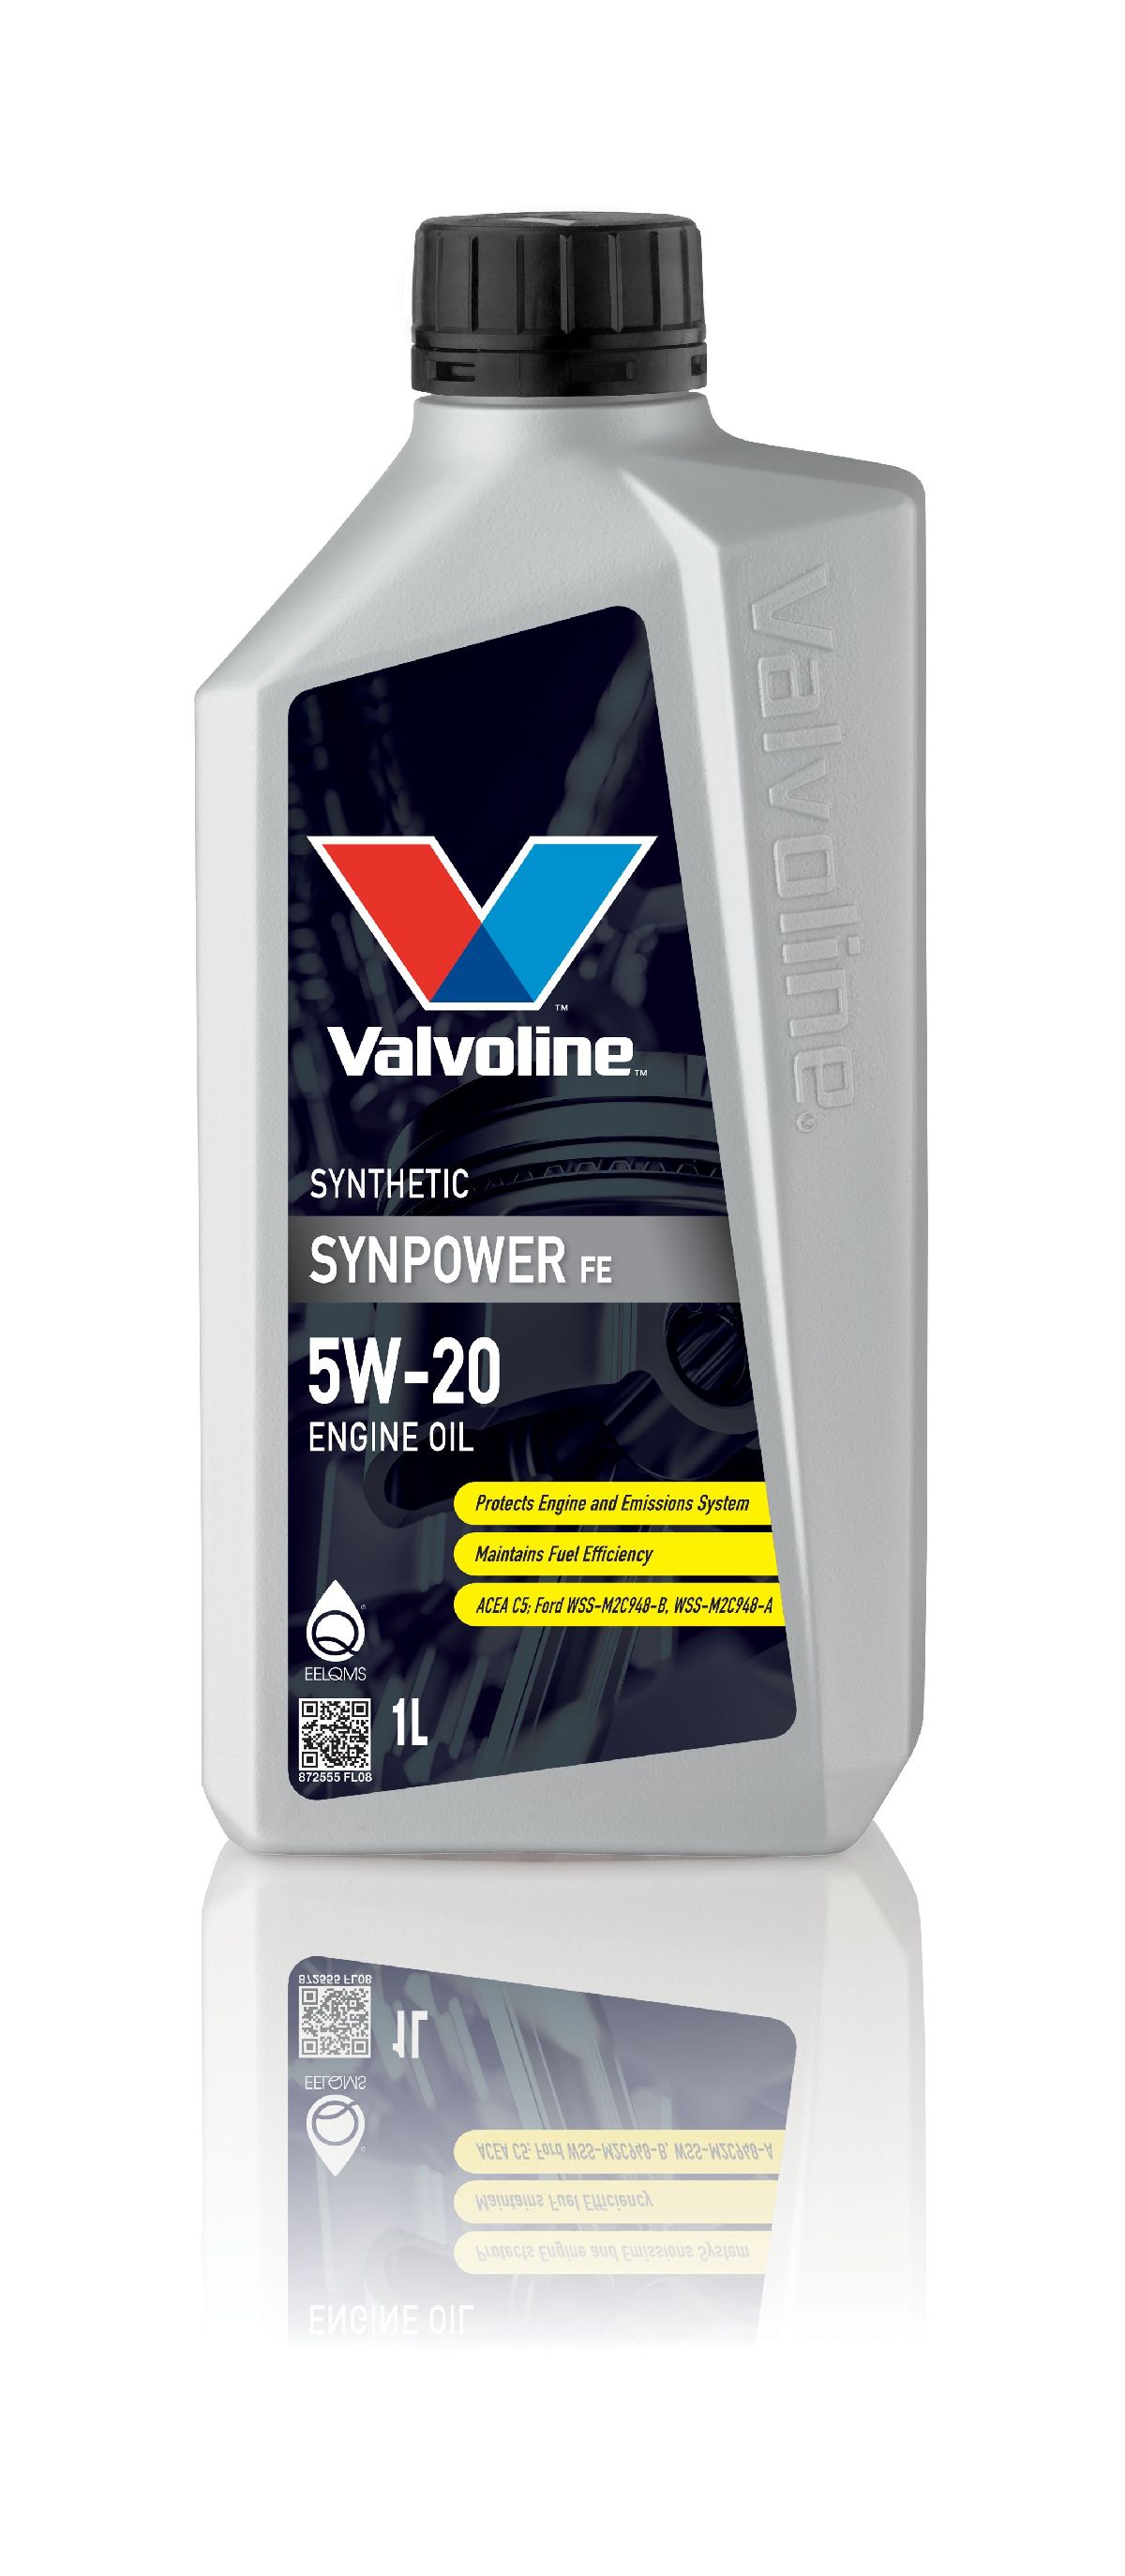 Valvoline Synpower FE 5W-20